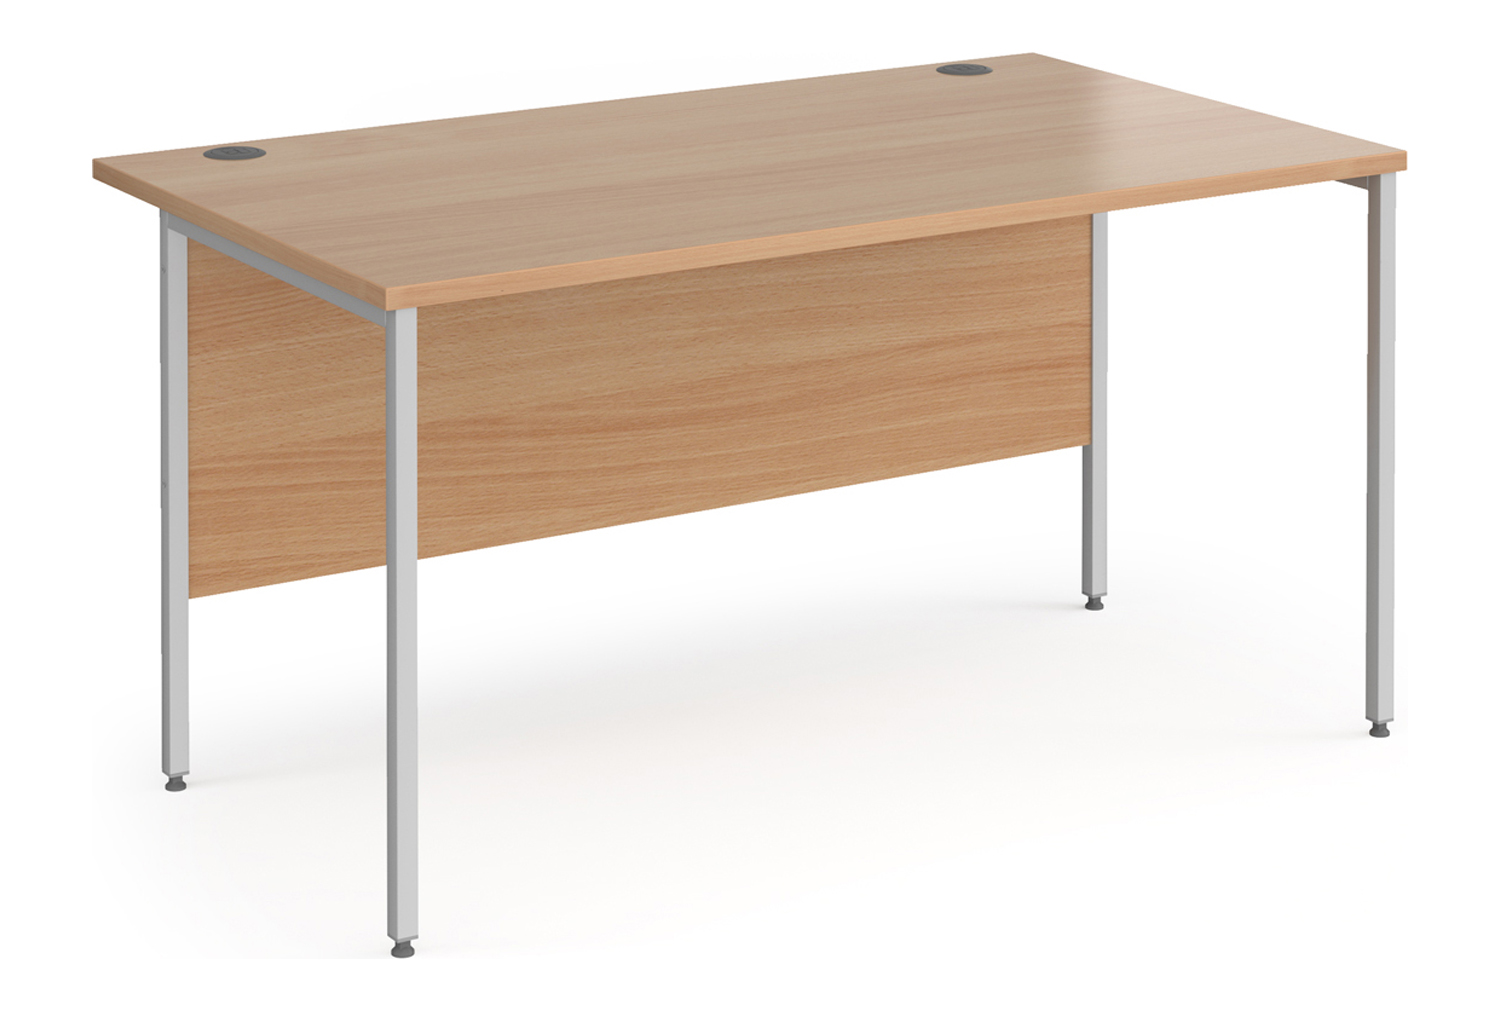 Value Line Classic+ Rectangular H-Leg Office Desk (Silver Leg), 140wx80dx73h (cm), Beech, Express Delivery